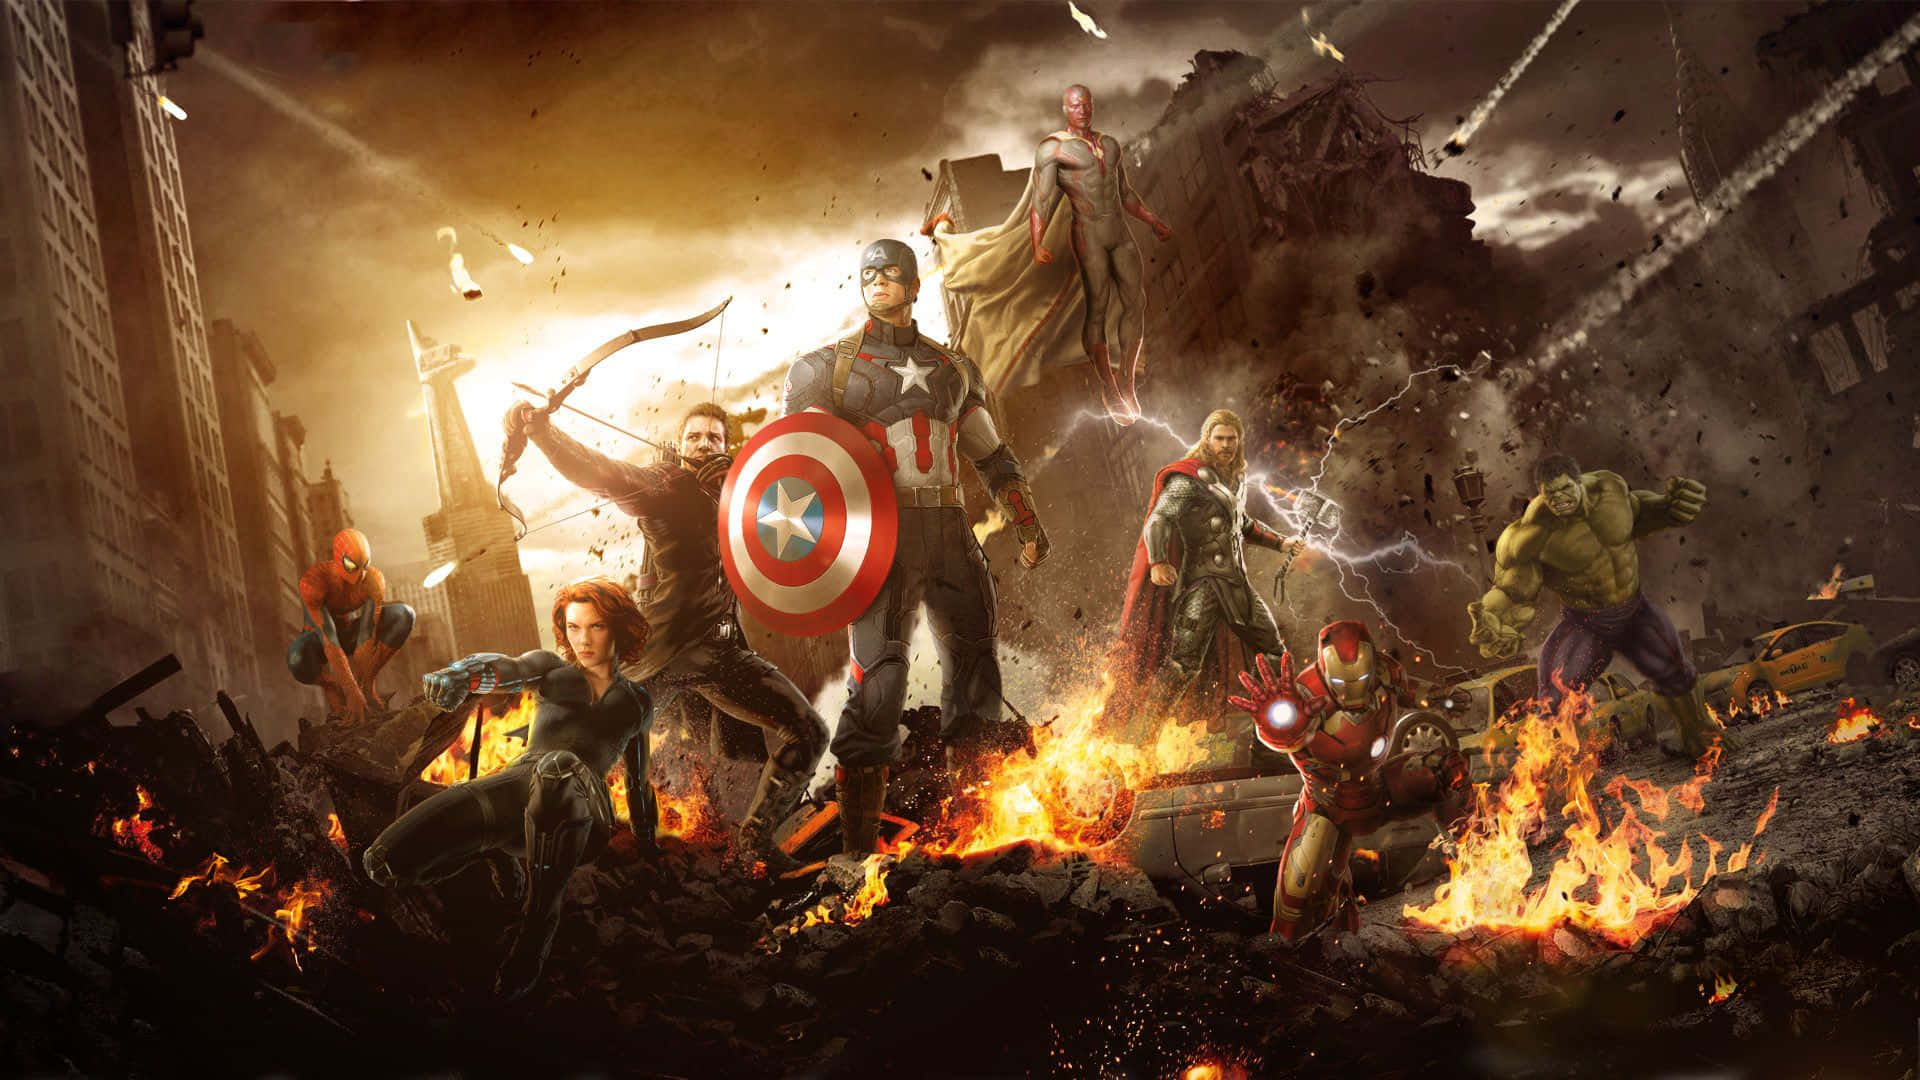 "Heroes Assemble - The Marvel Universe Unites"